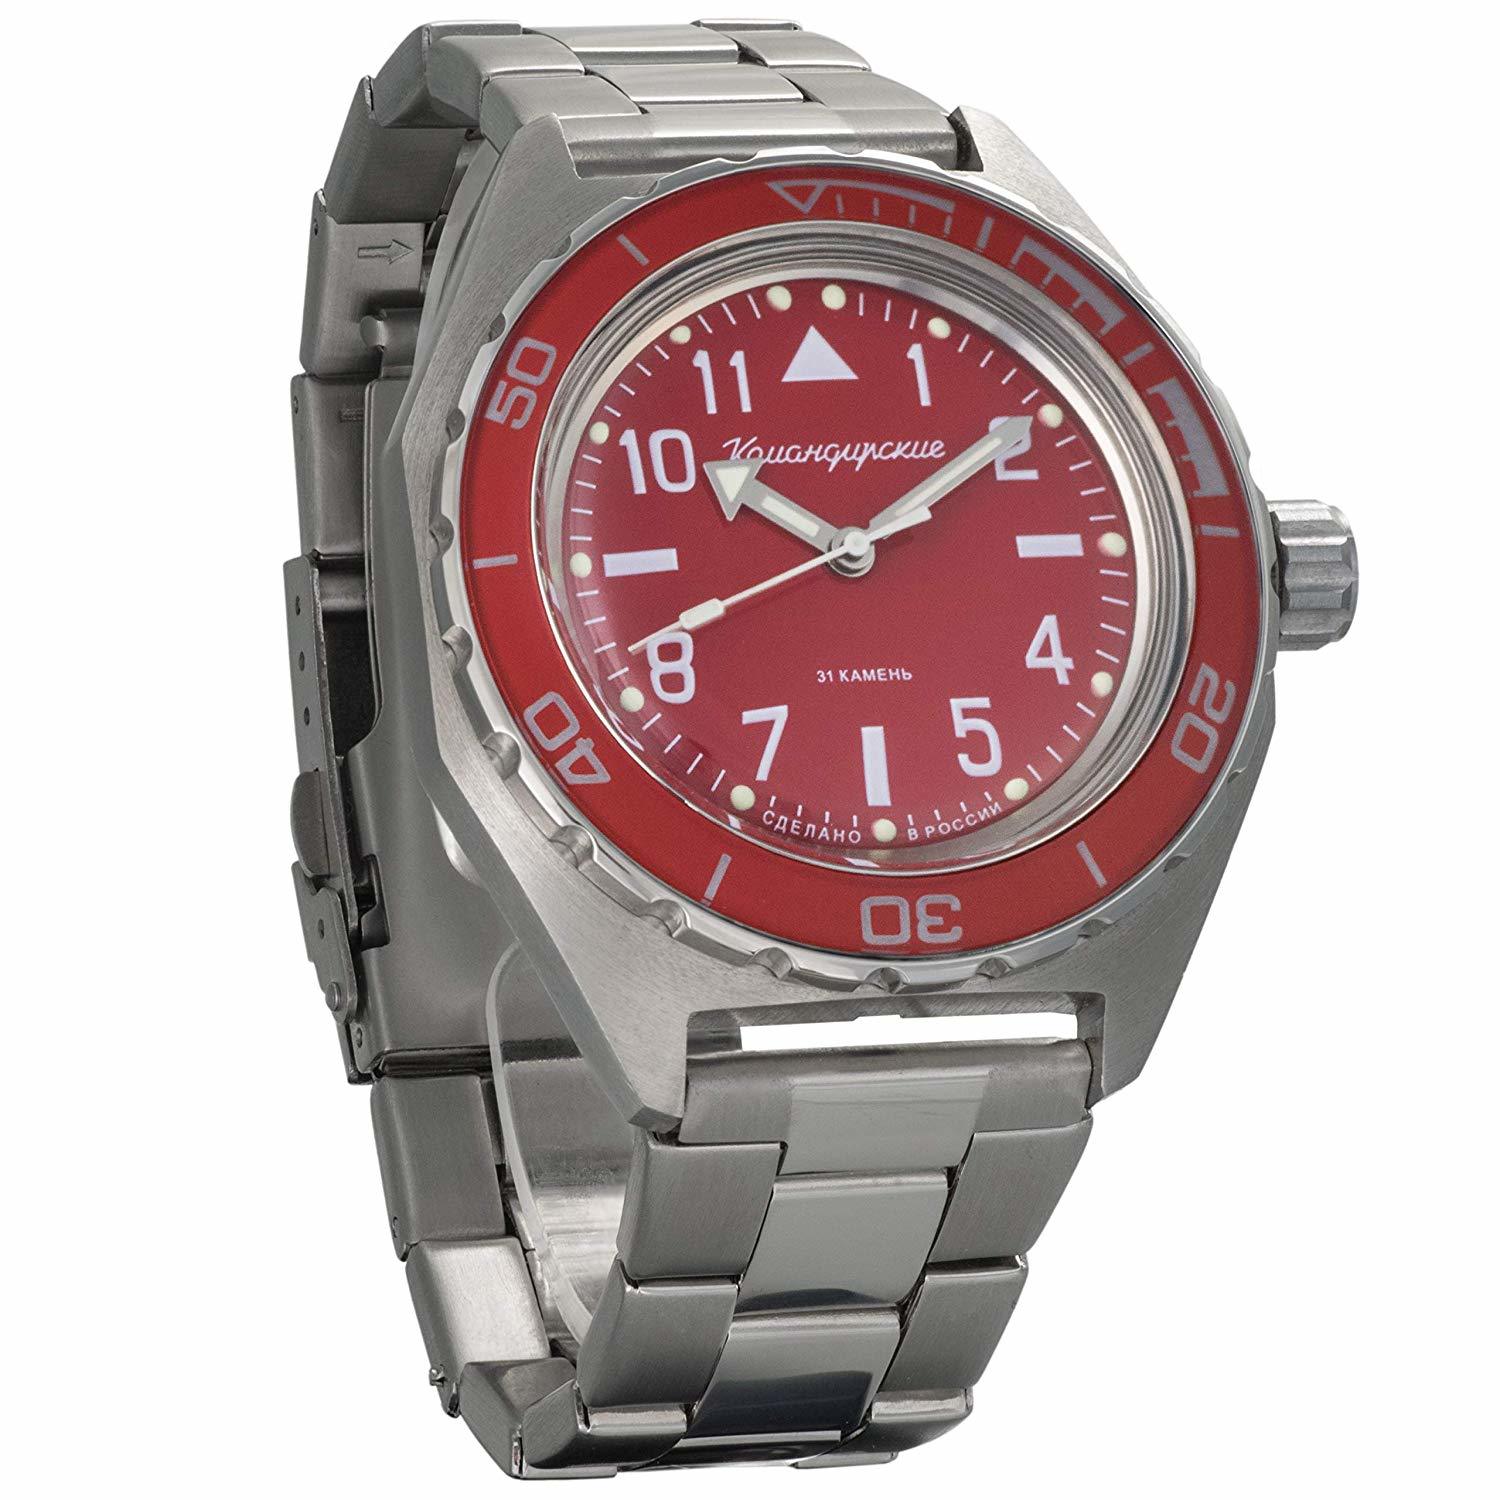 Vostok Komandirskie Automatic Russian wrist watch 650840 /2415.01 Red ...